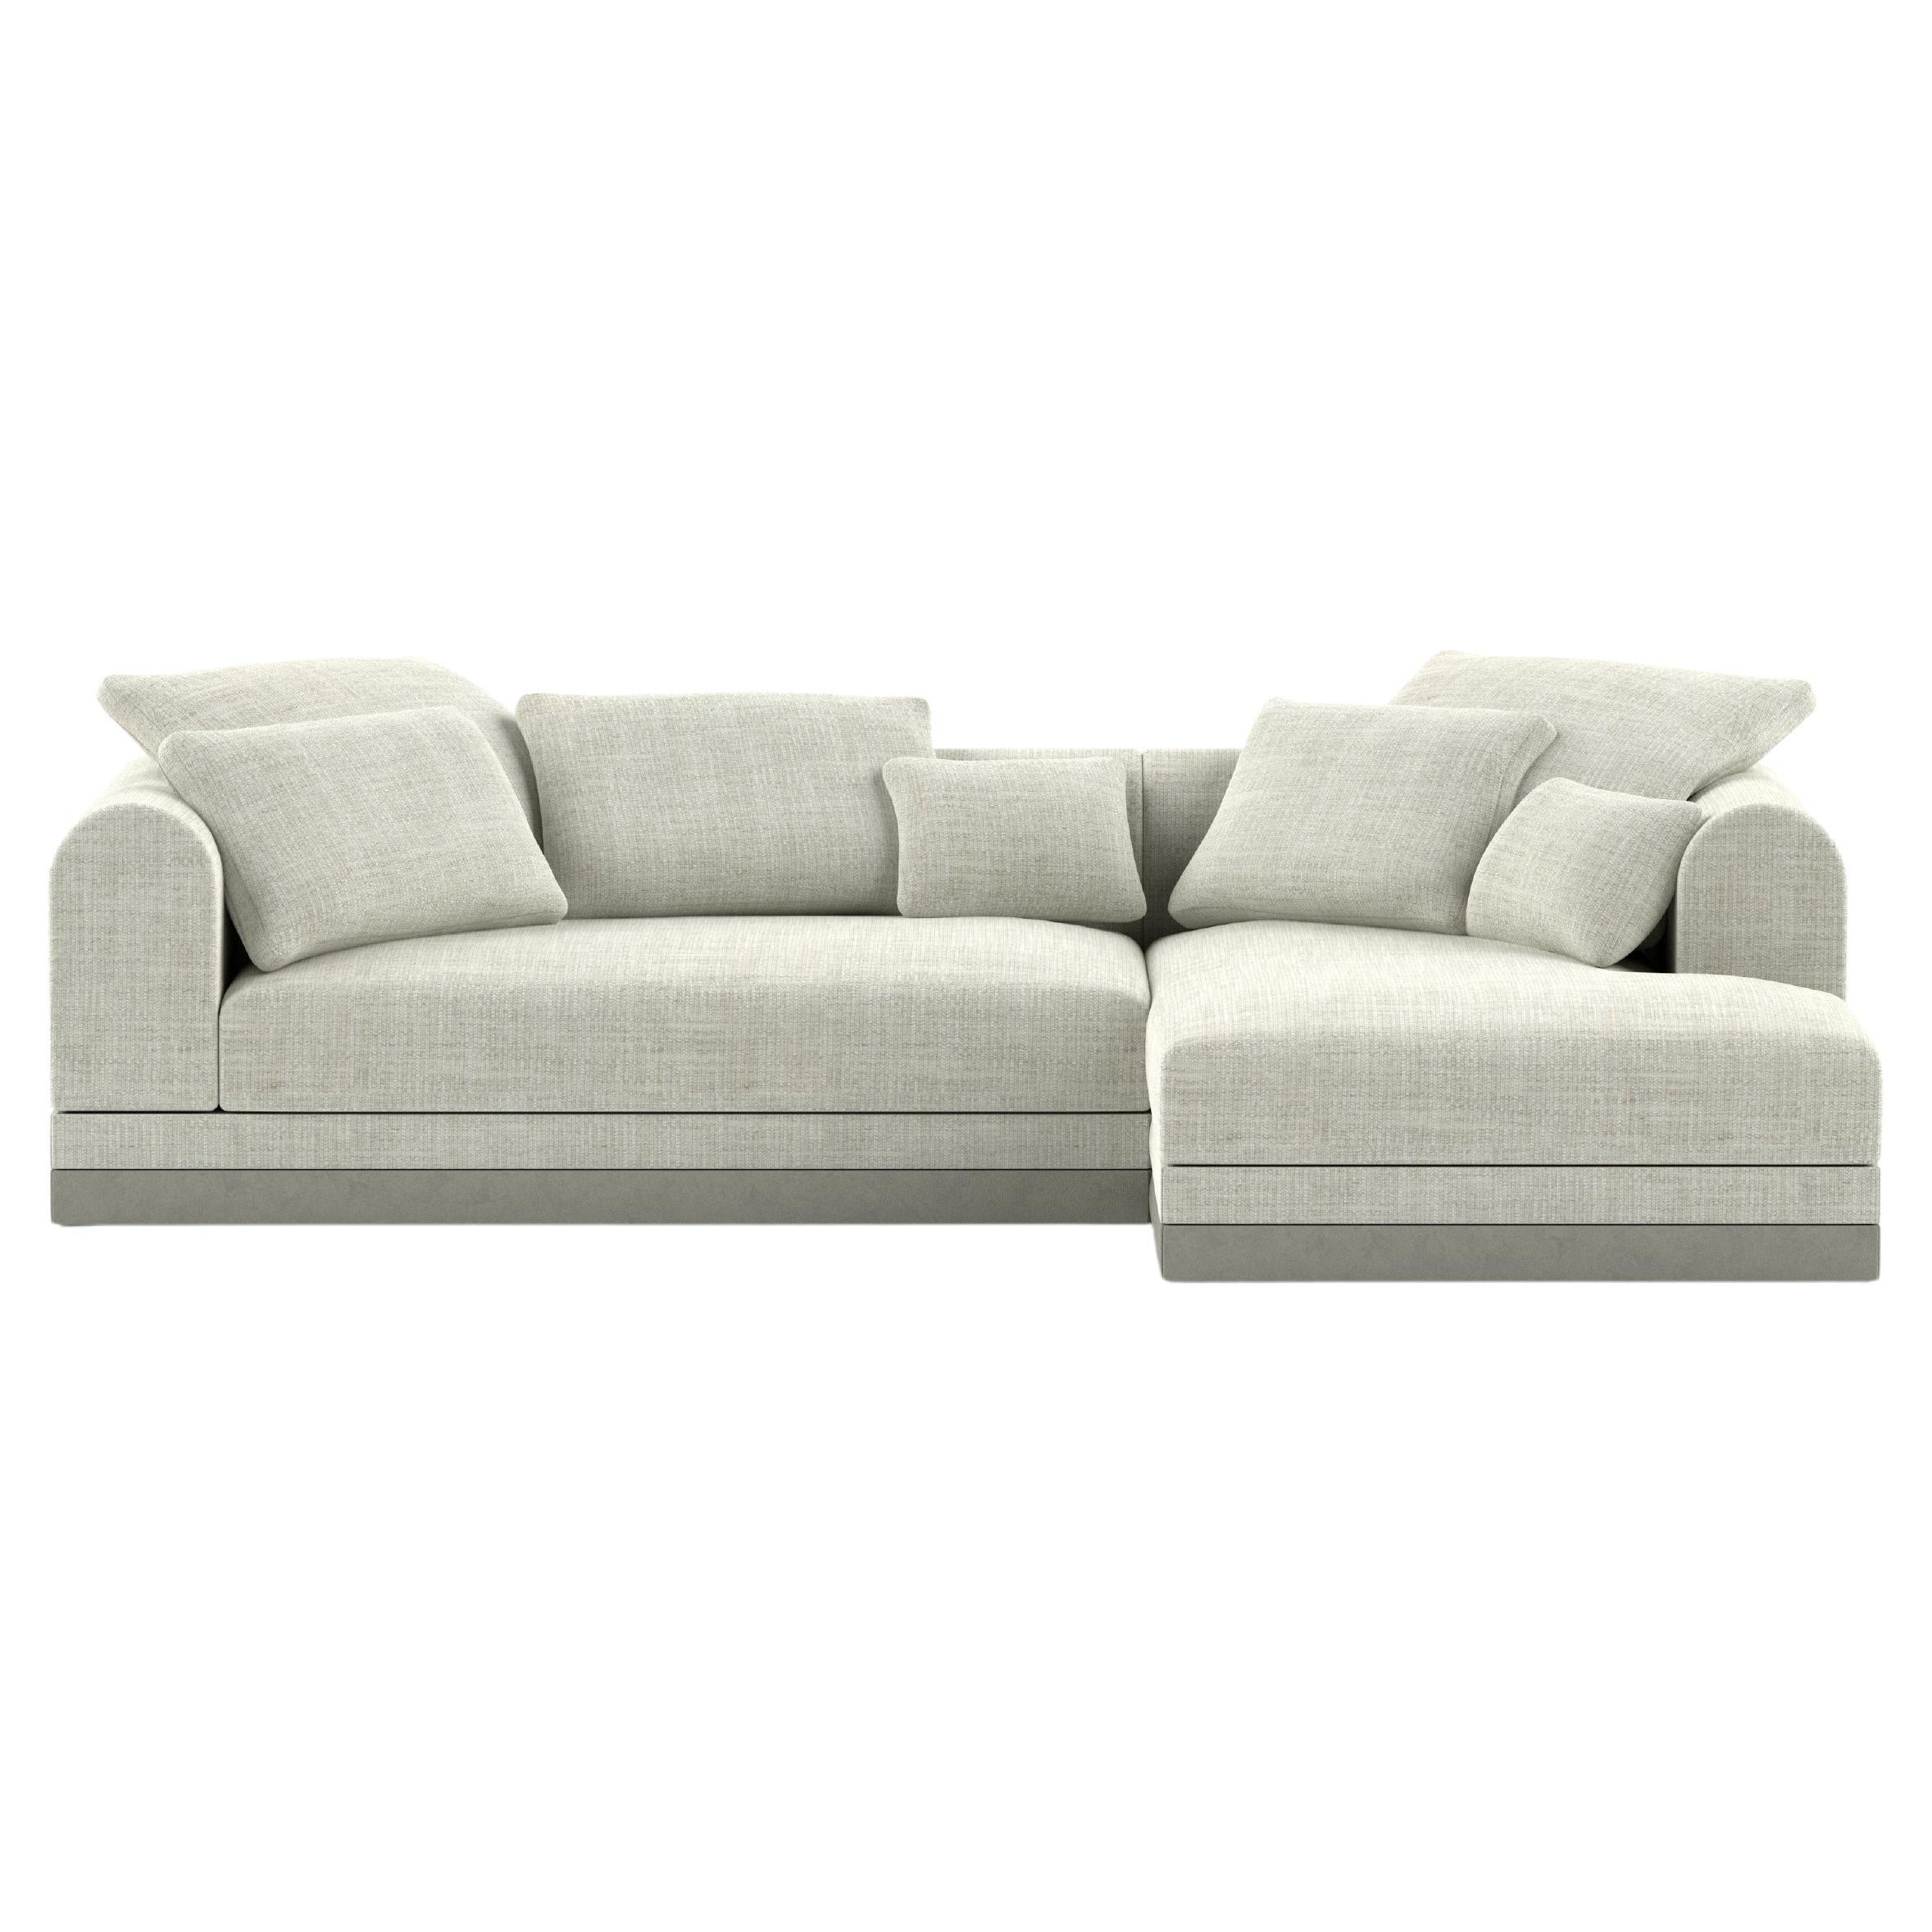 'Aqueduct' Contemporary Sofa by Poiat, Setup 1, Fox 02, Low Plinth For Sale